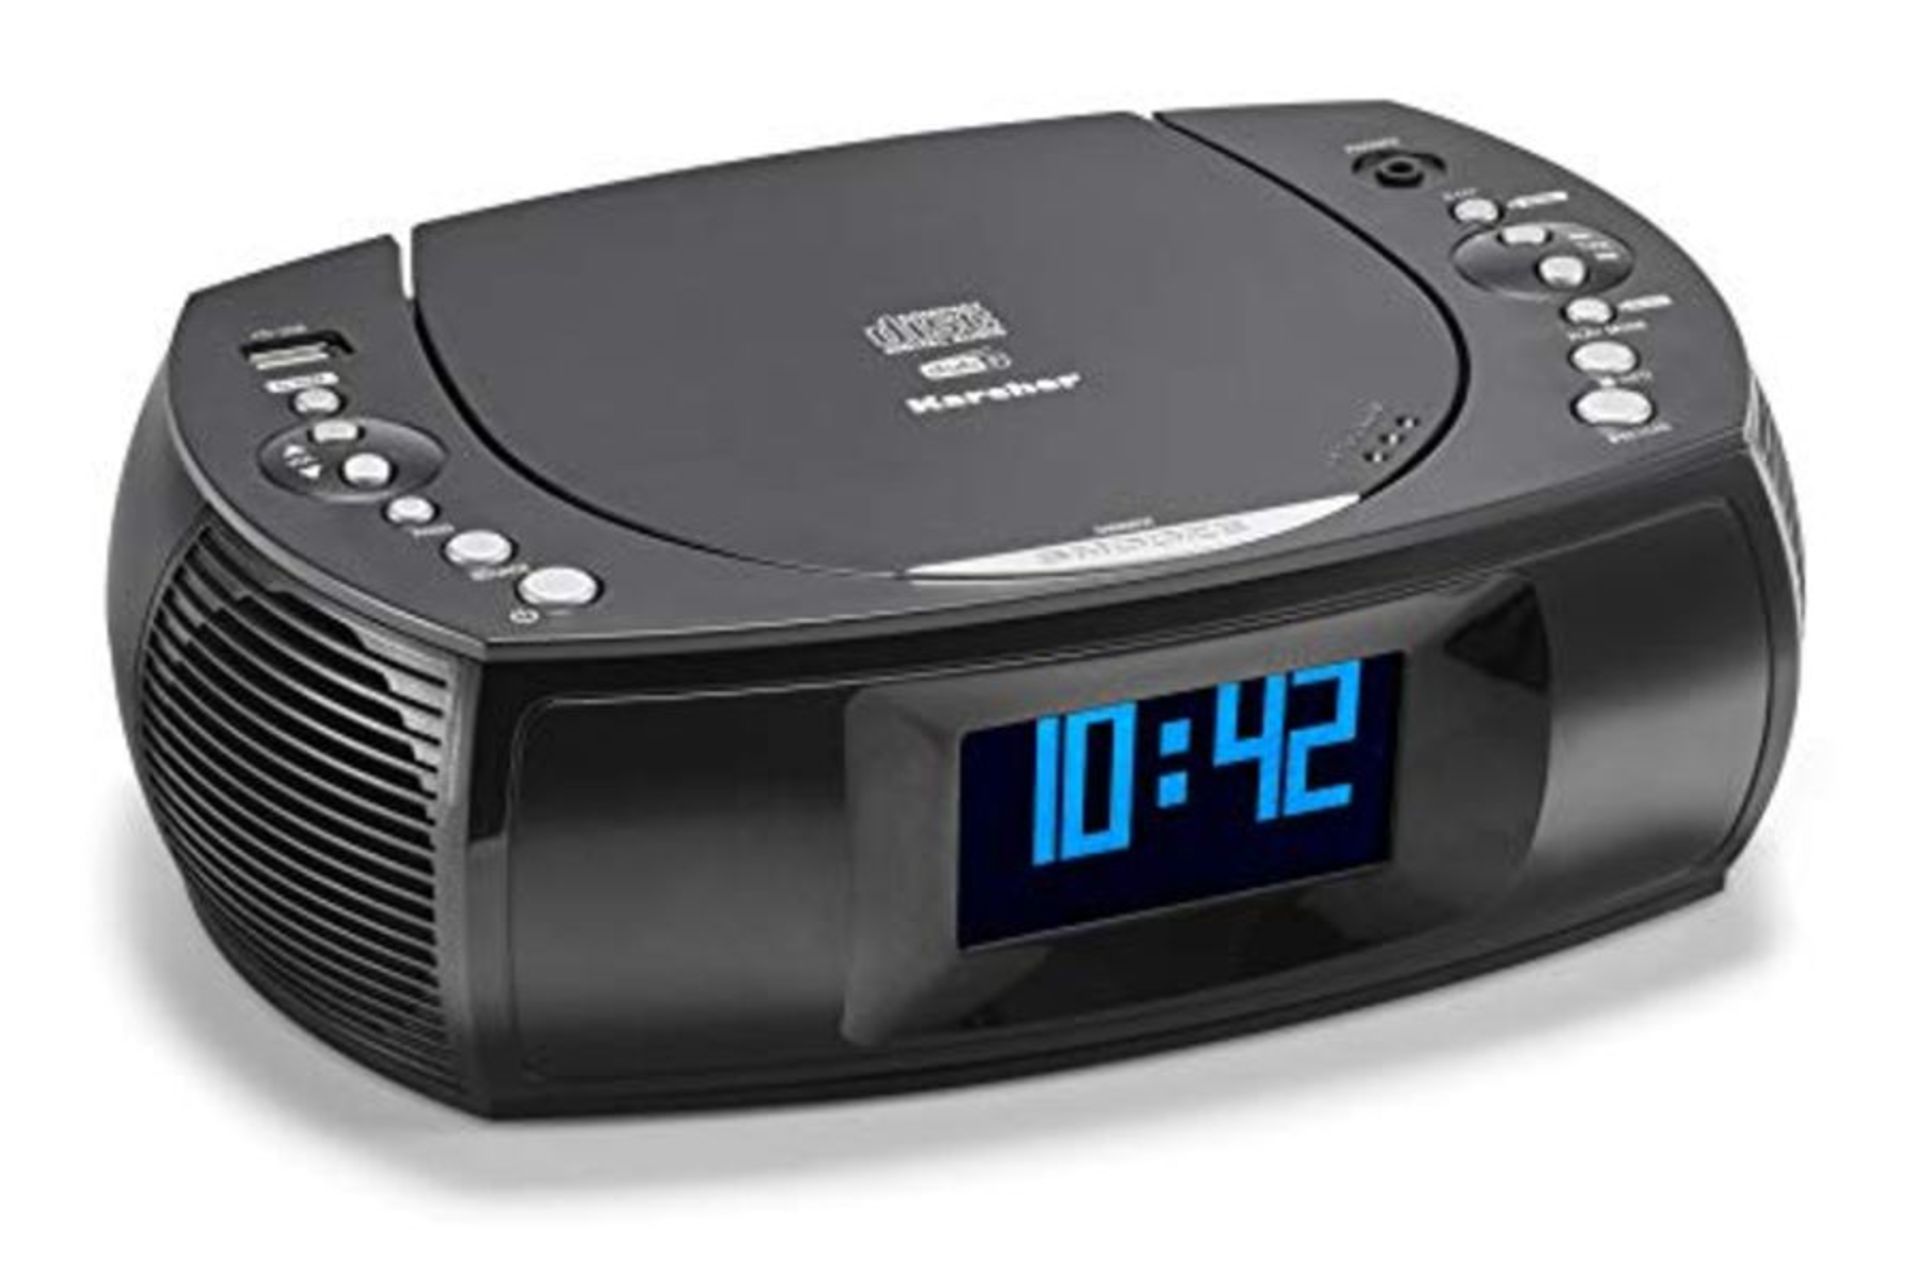 RRP £59.00 Karcher UR 1309D Radiowecker mit MP3 / CD Player und DAB+ / UKW Radio (je 20 Senderspe